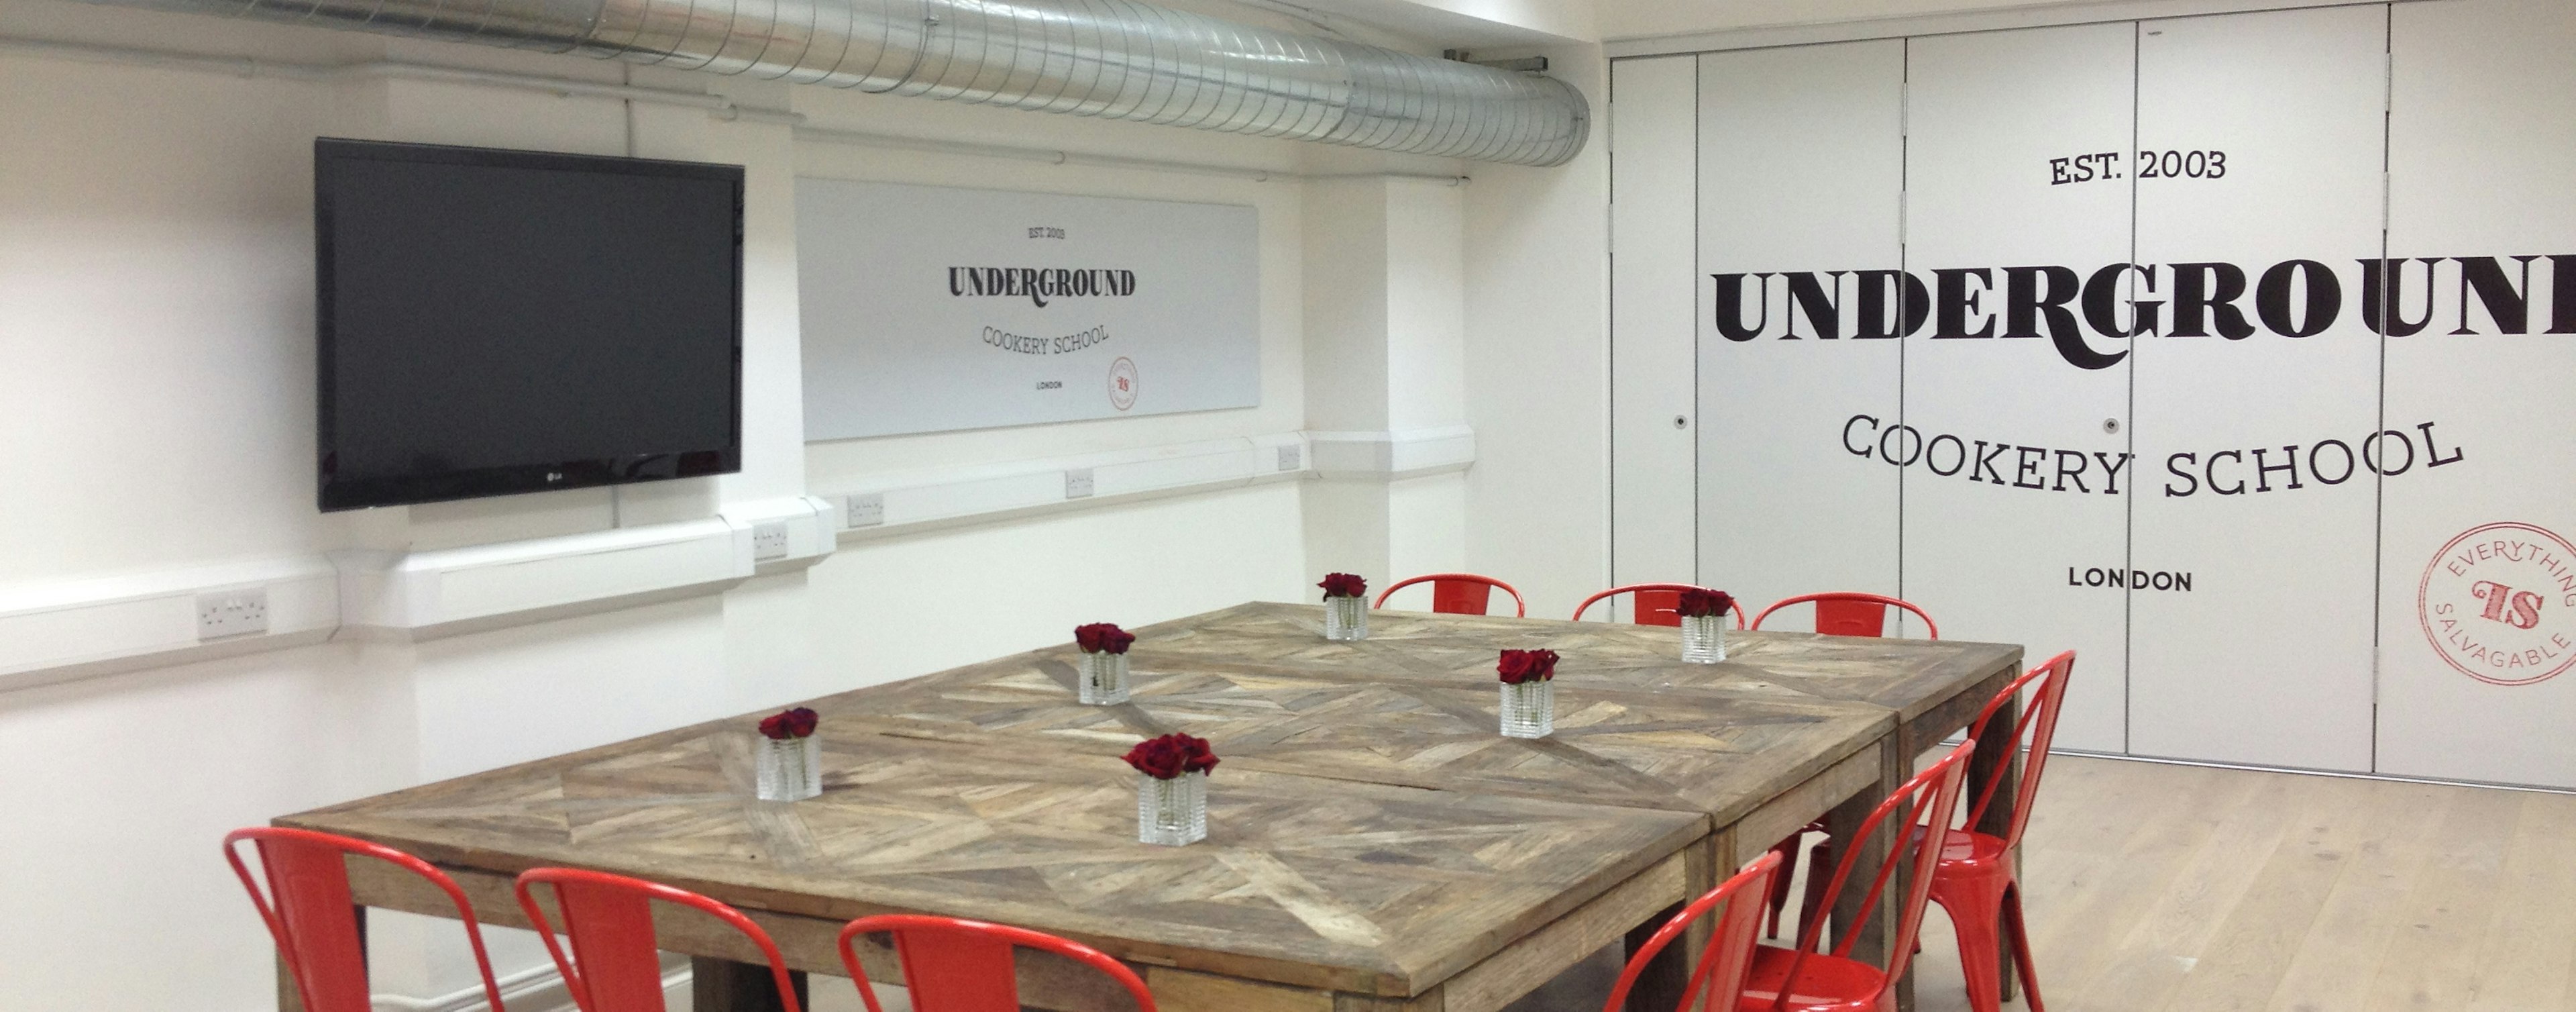 Underground Cookery School_Dining Space.JPG